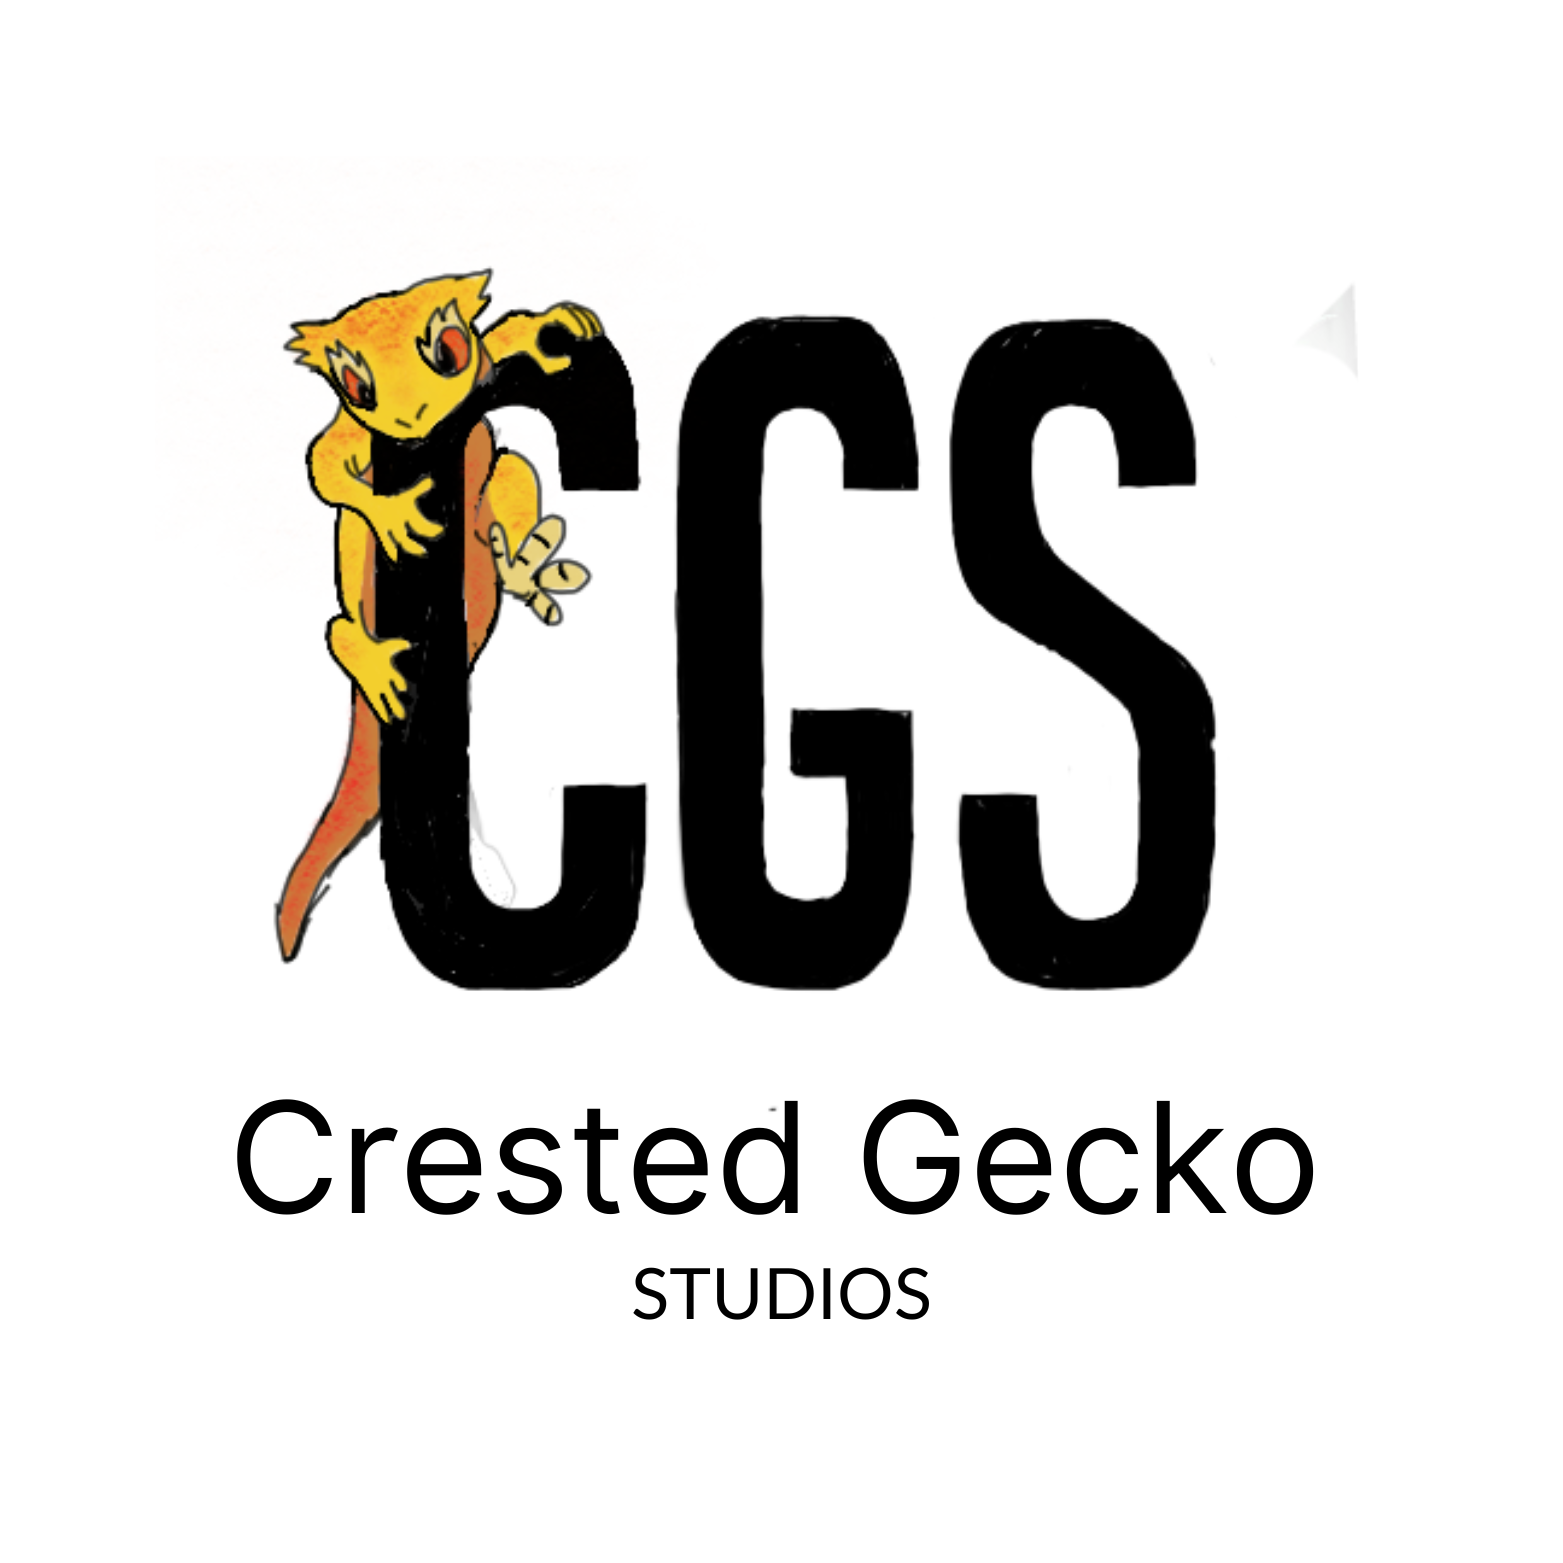 Crested Gecko Studios